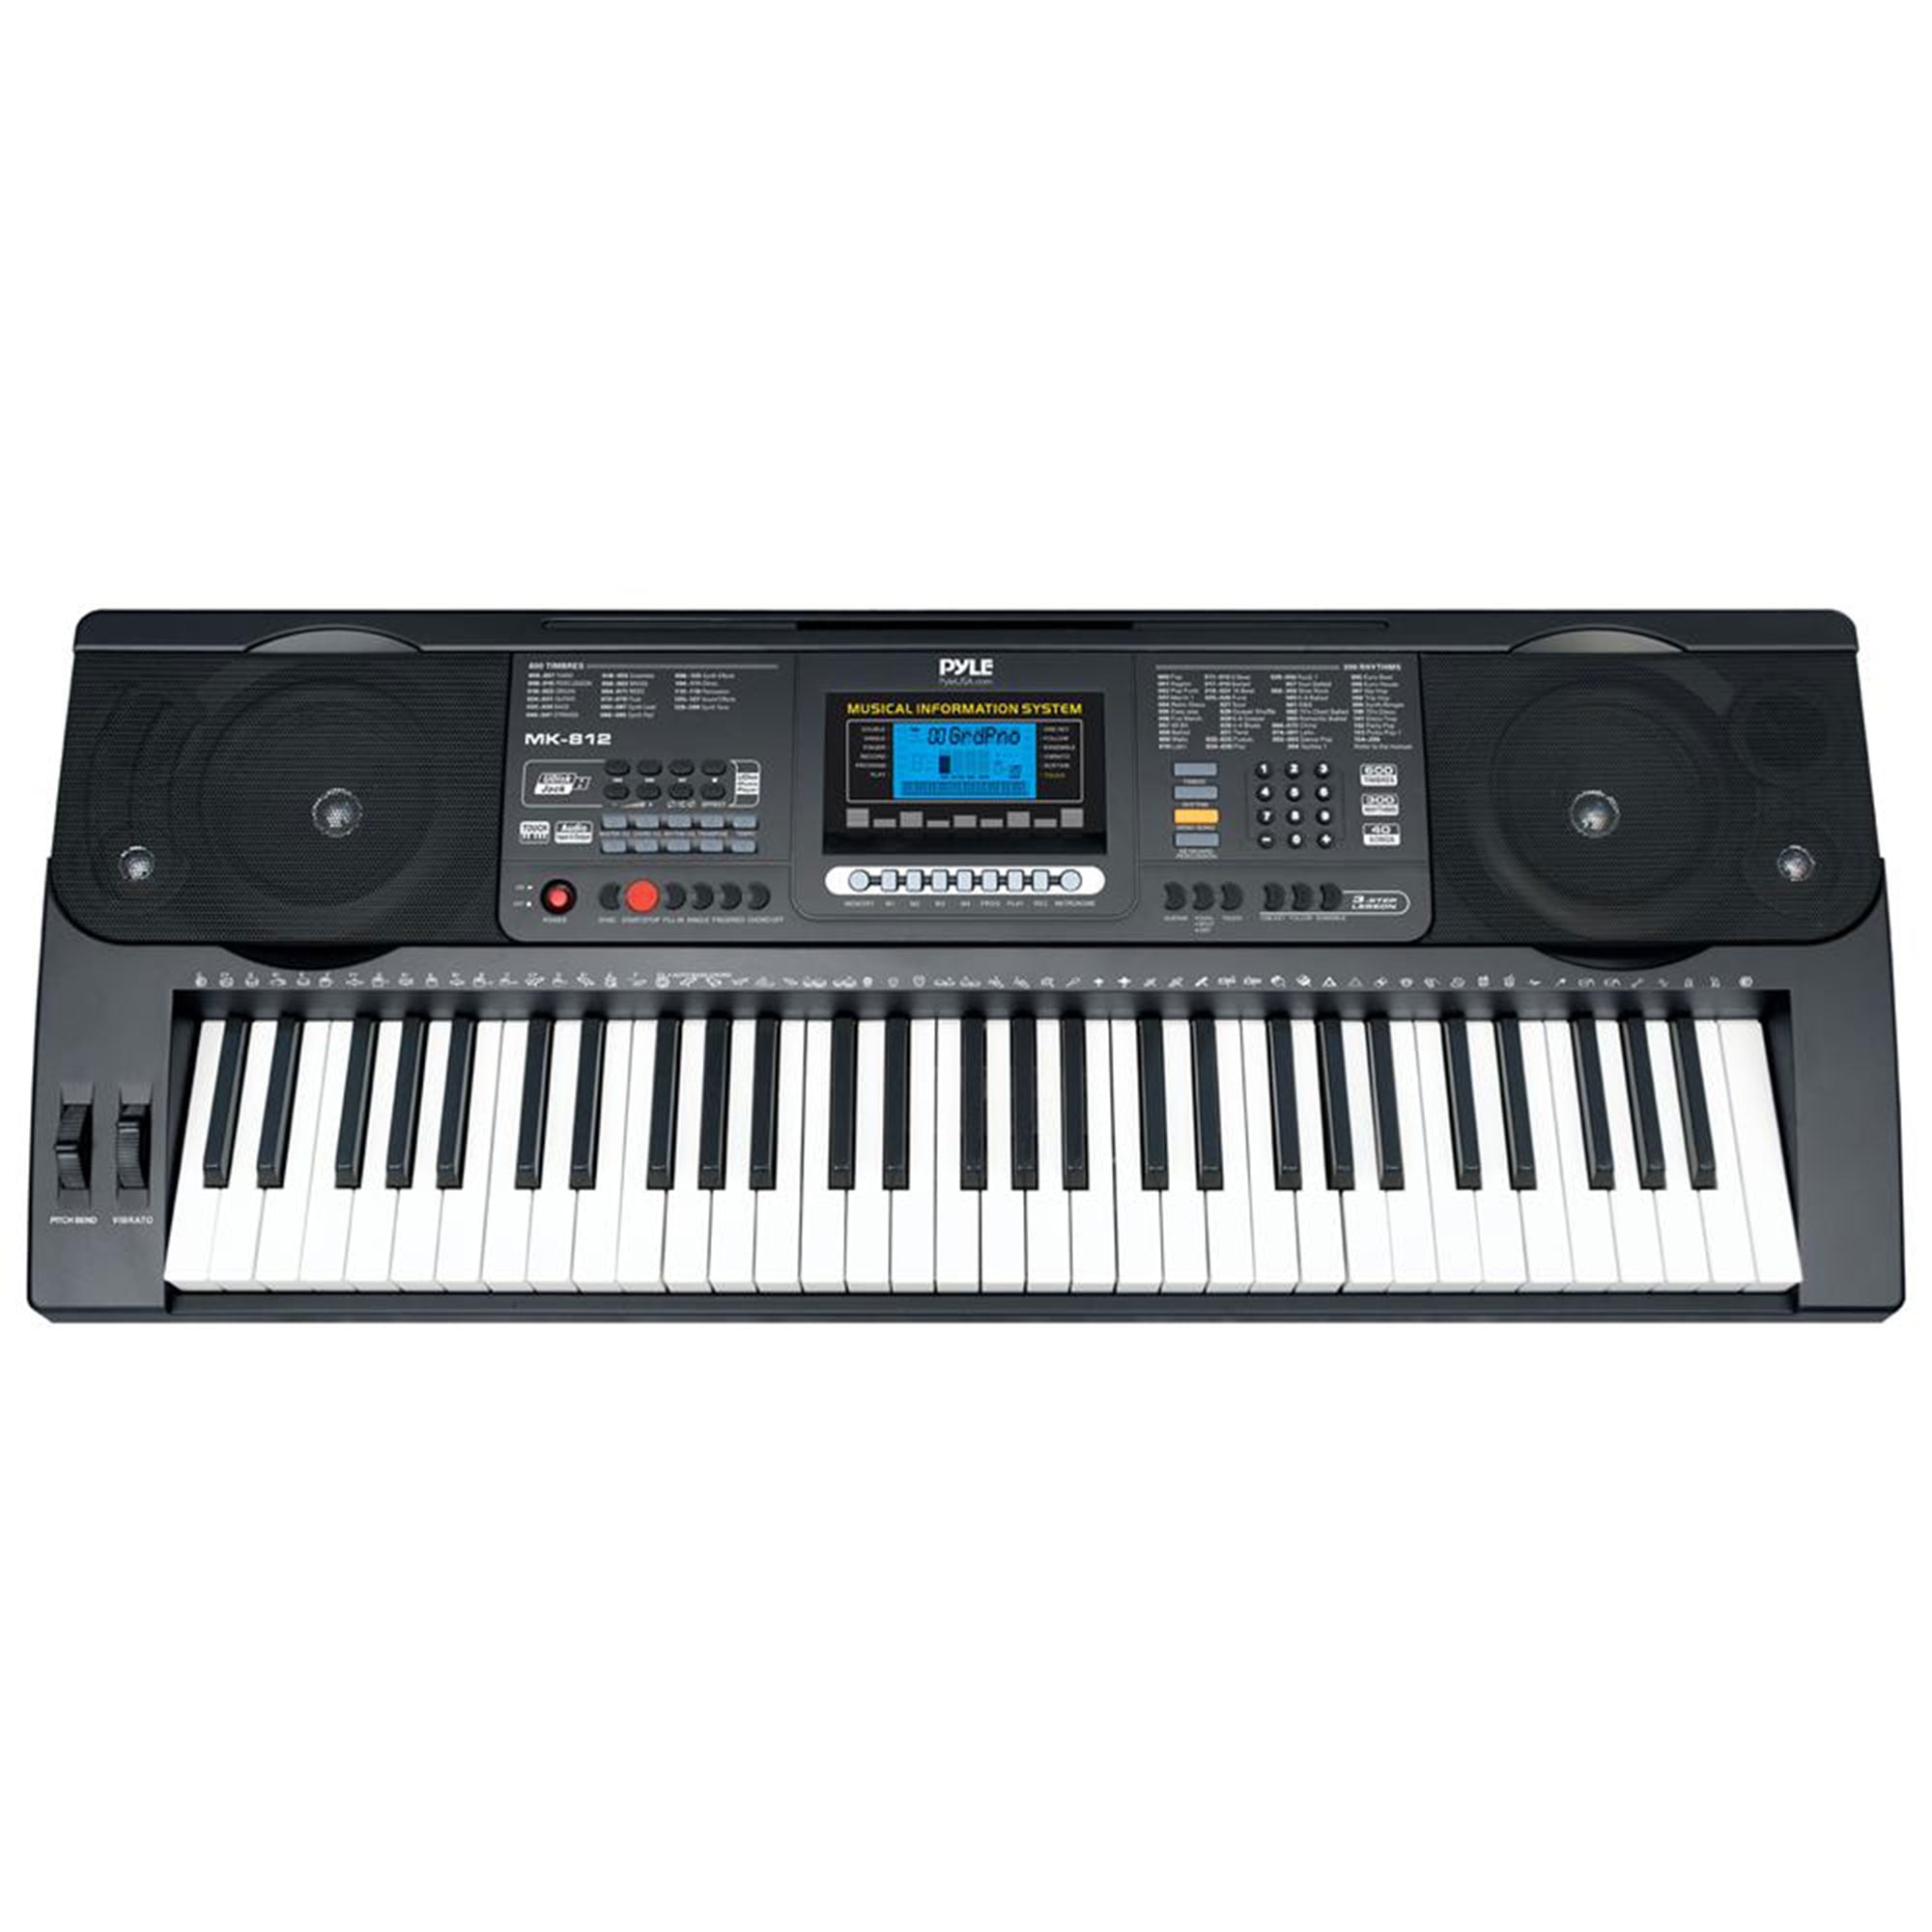 Pyle 61 Keys Digital Electronic Piano Keyboard, Portable Musical